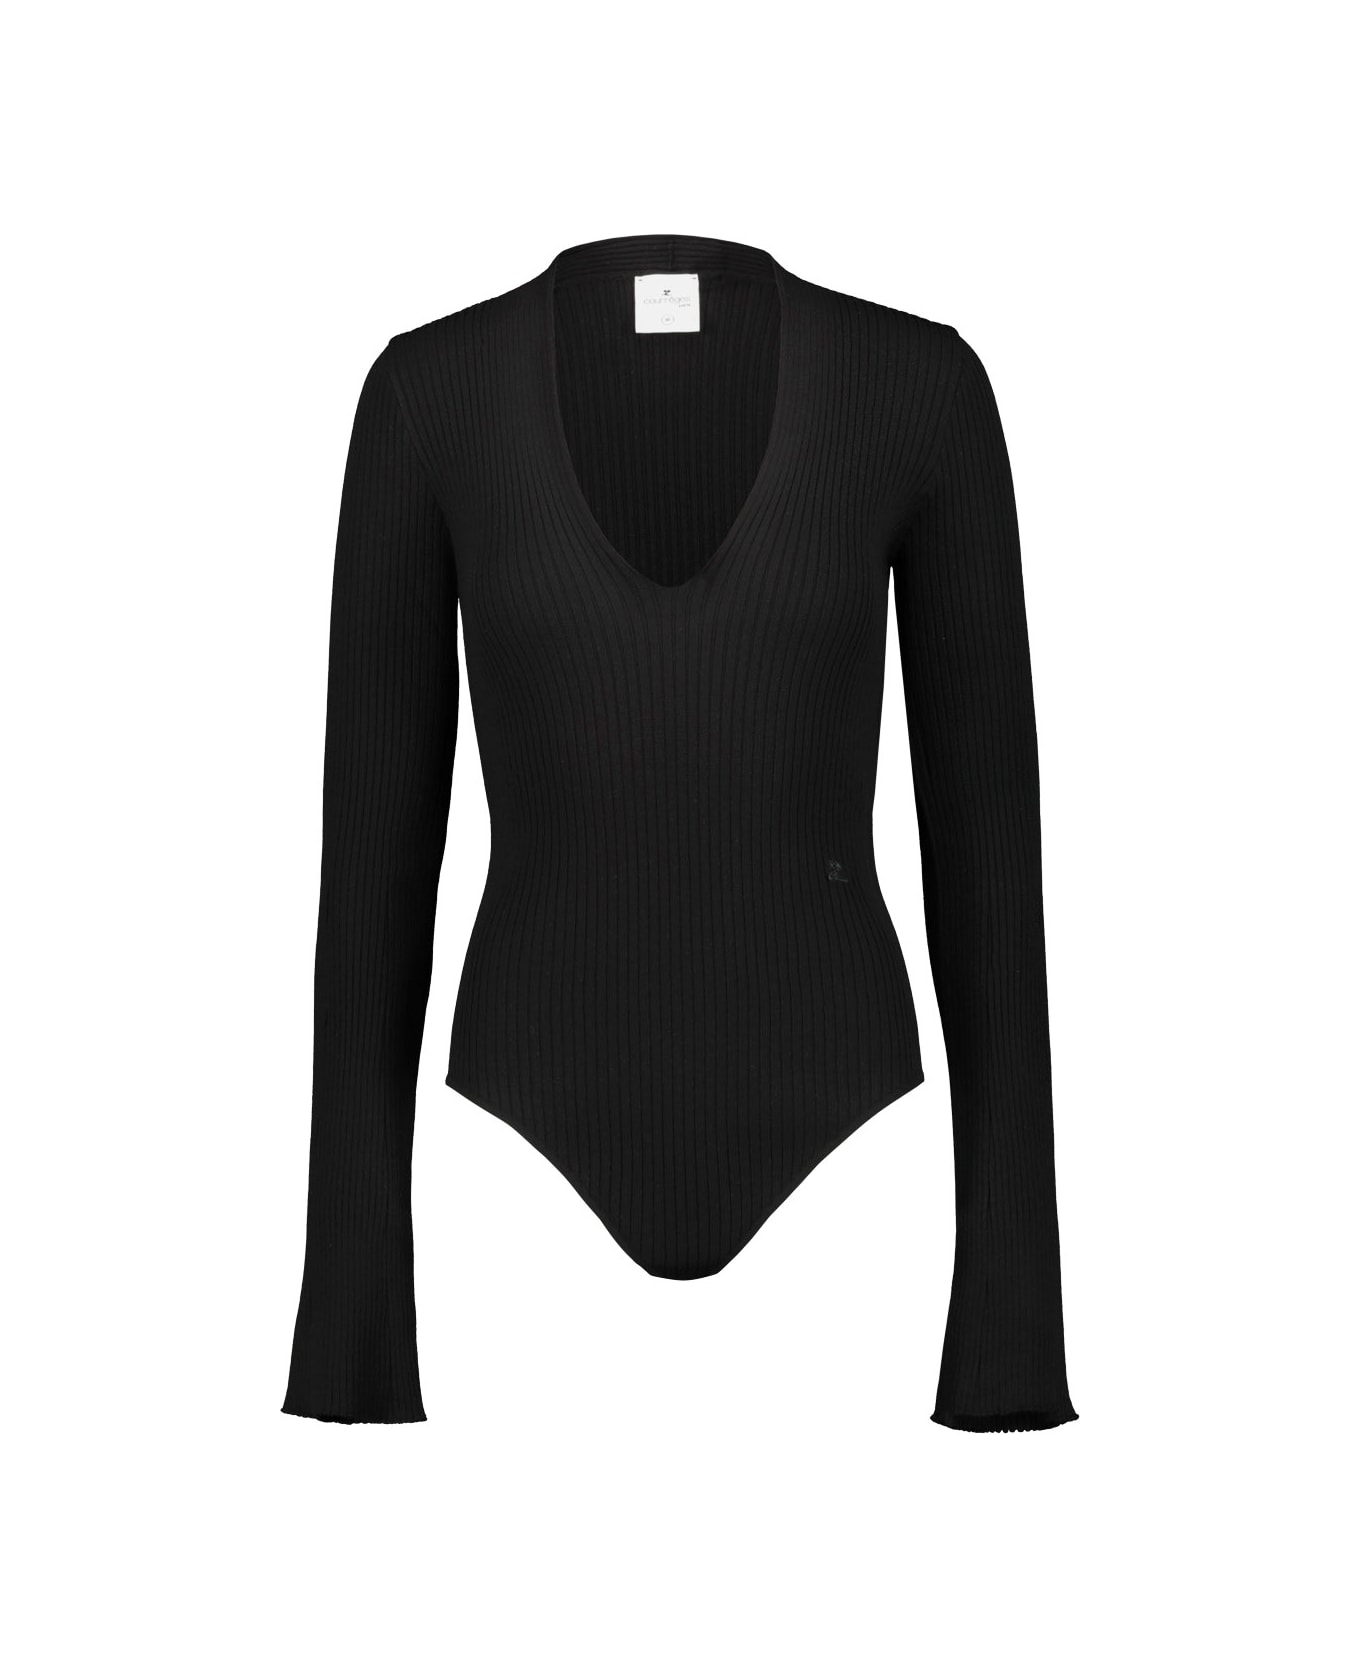 Courrèges Vneck Bodysuit - Black ボディスーツ